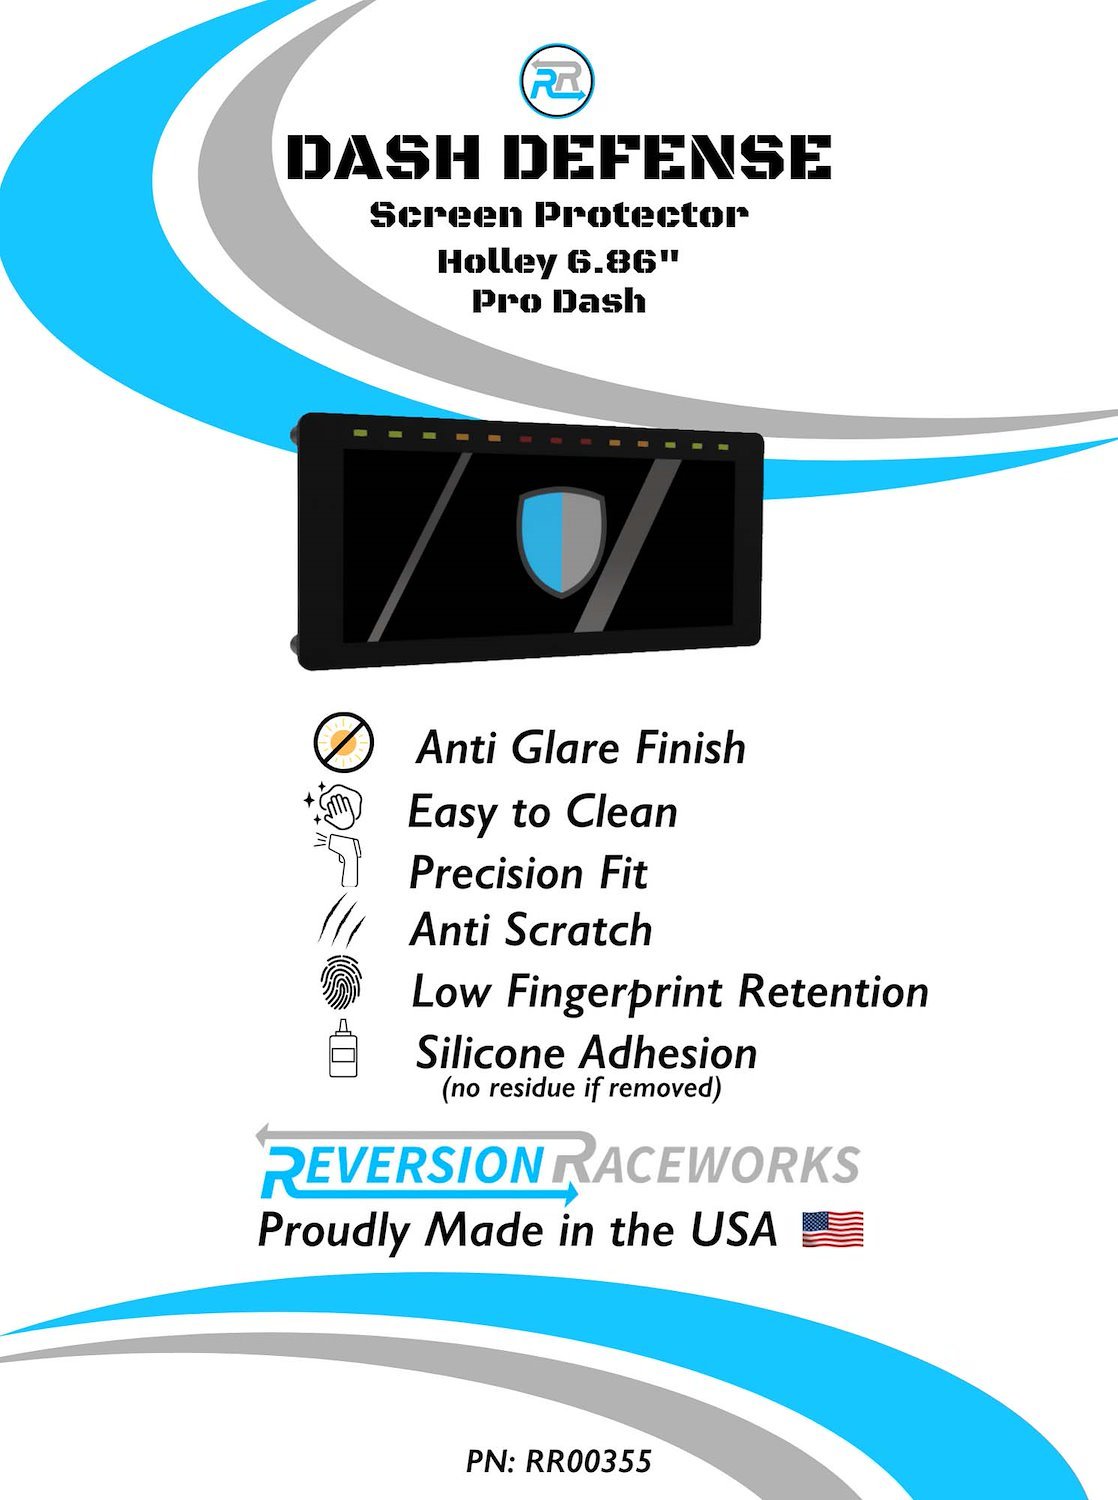 RR00355 Dash Defense Holley 6.86 in. Digital Dash Screen Protector